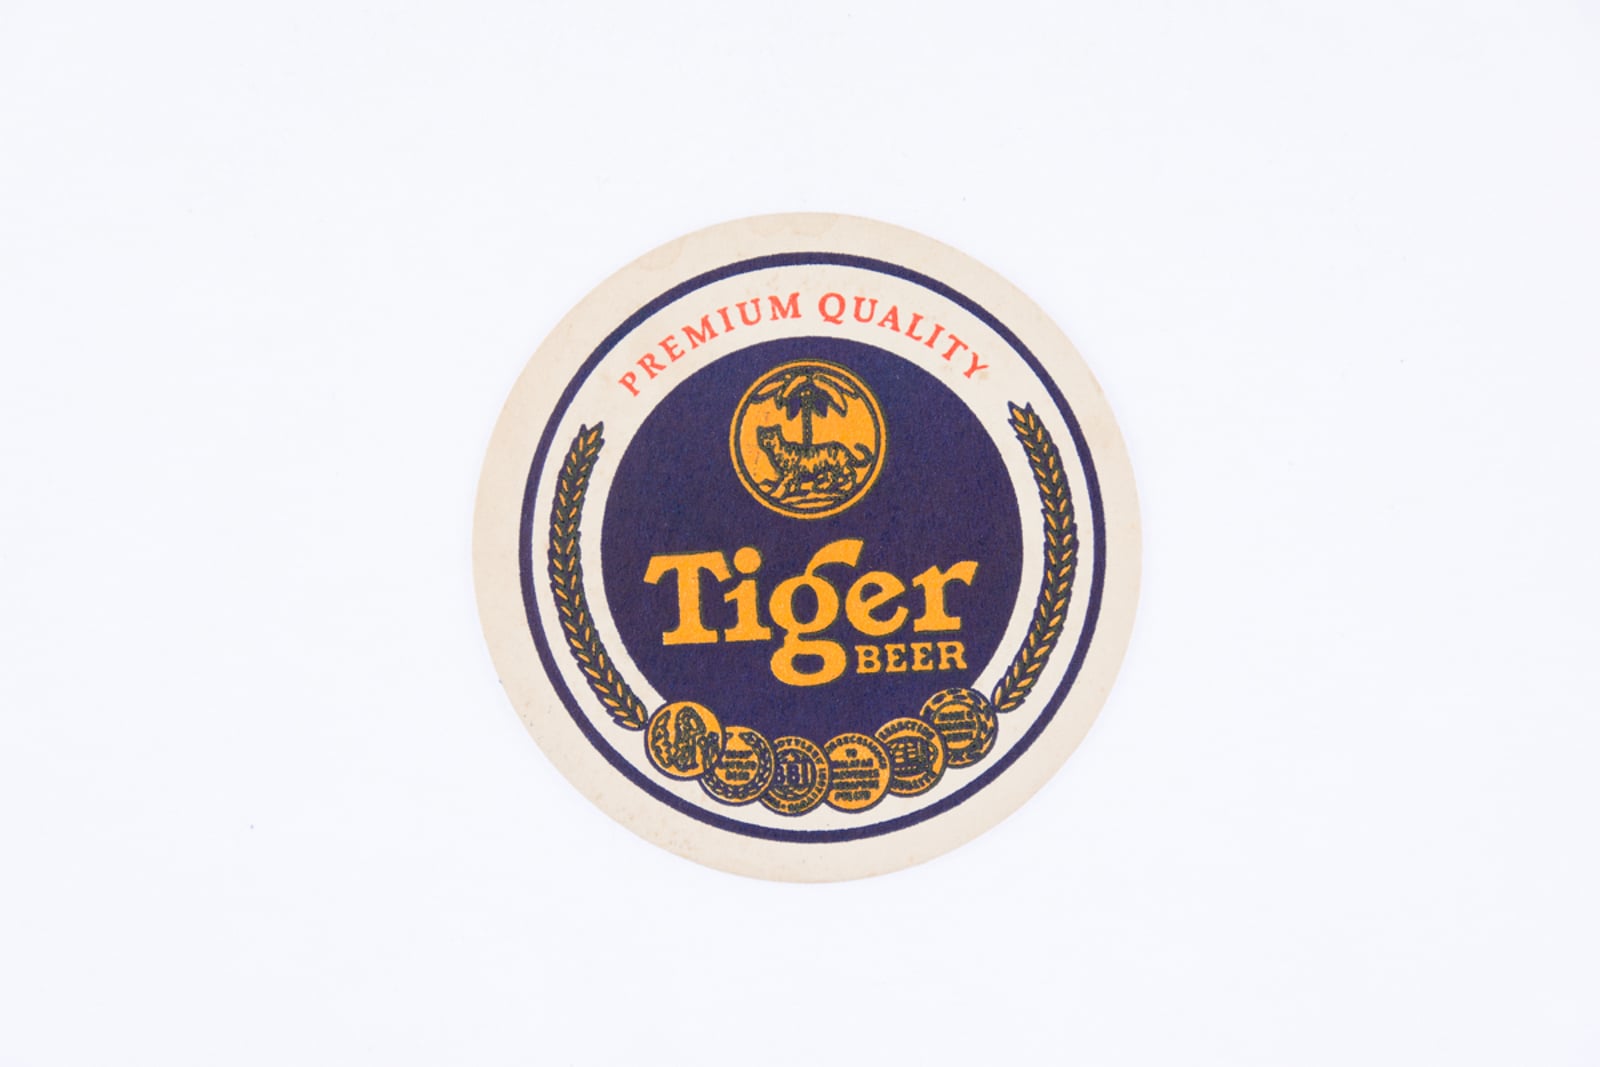 Tiger Beer Premium Quality Coaster